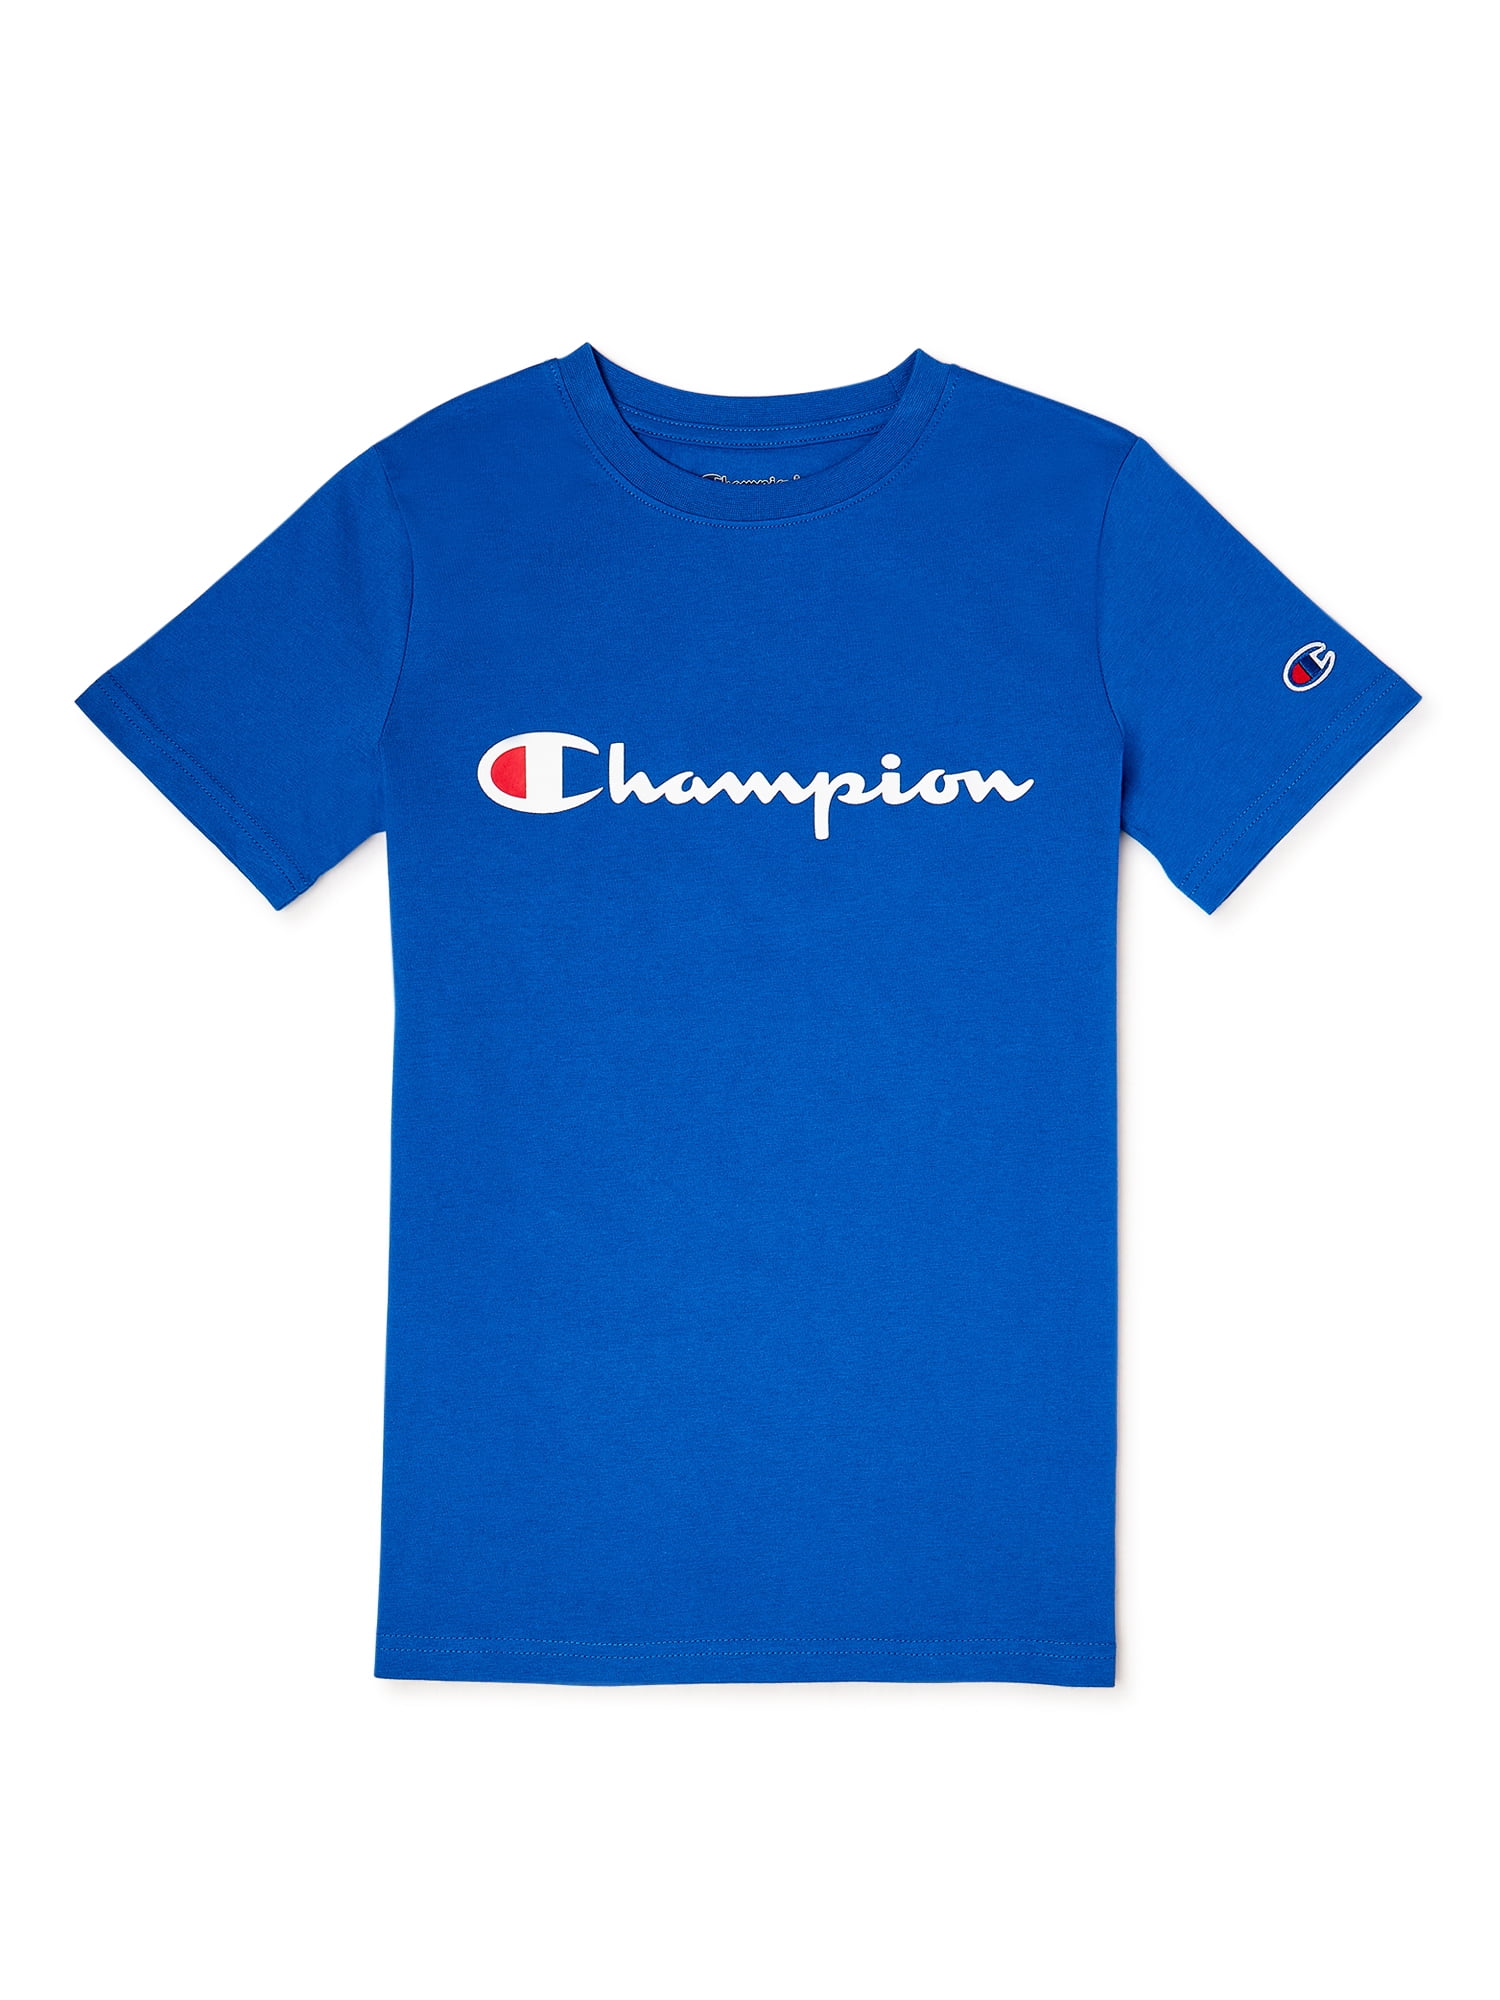 Champion Boys Signature T-Shirt, Sizes 4-20